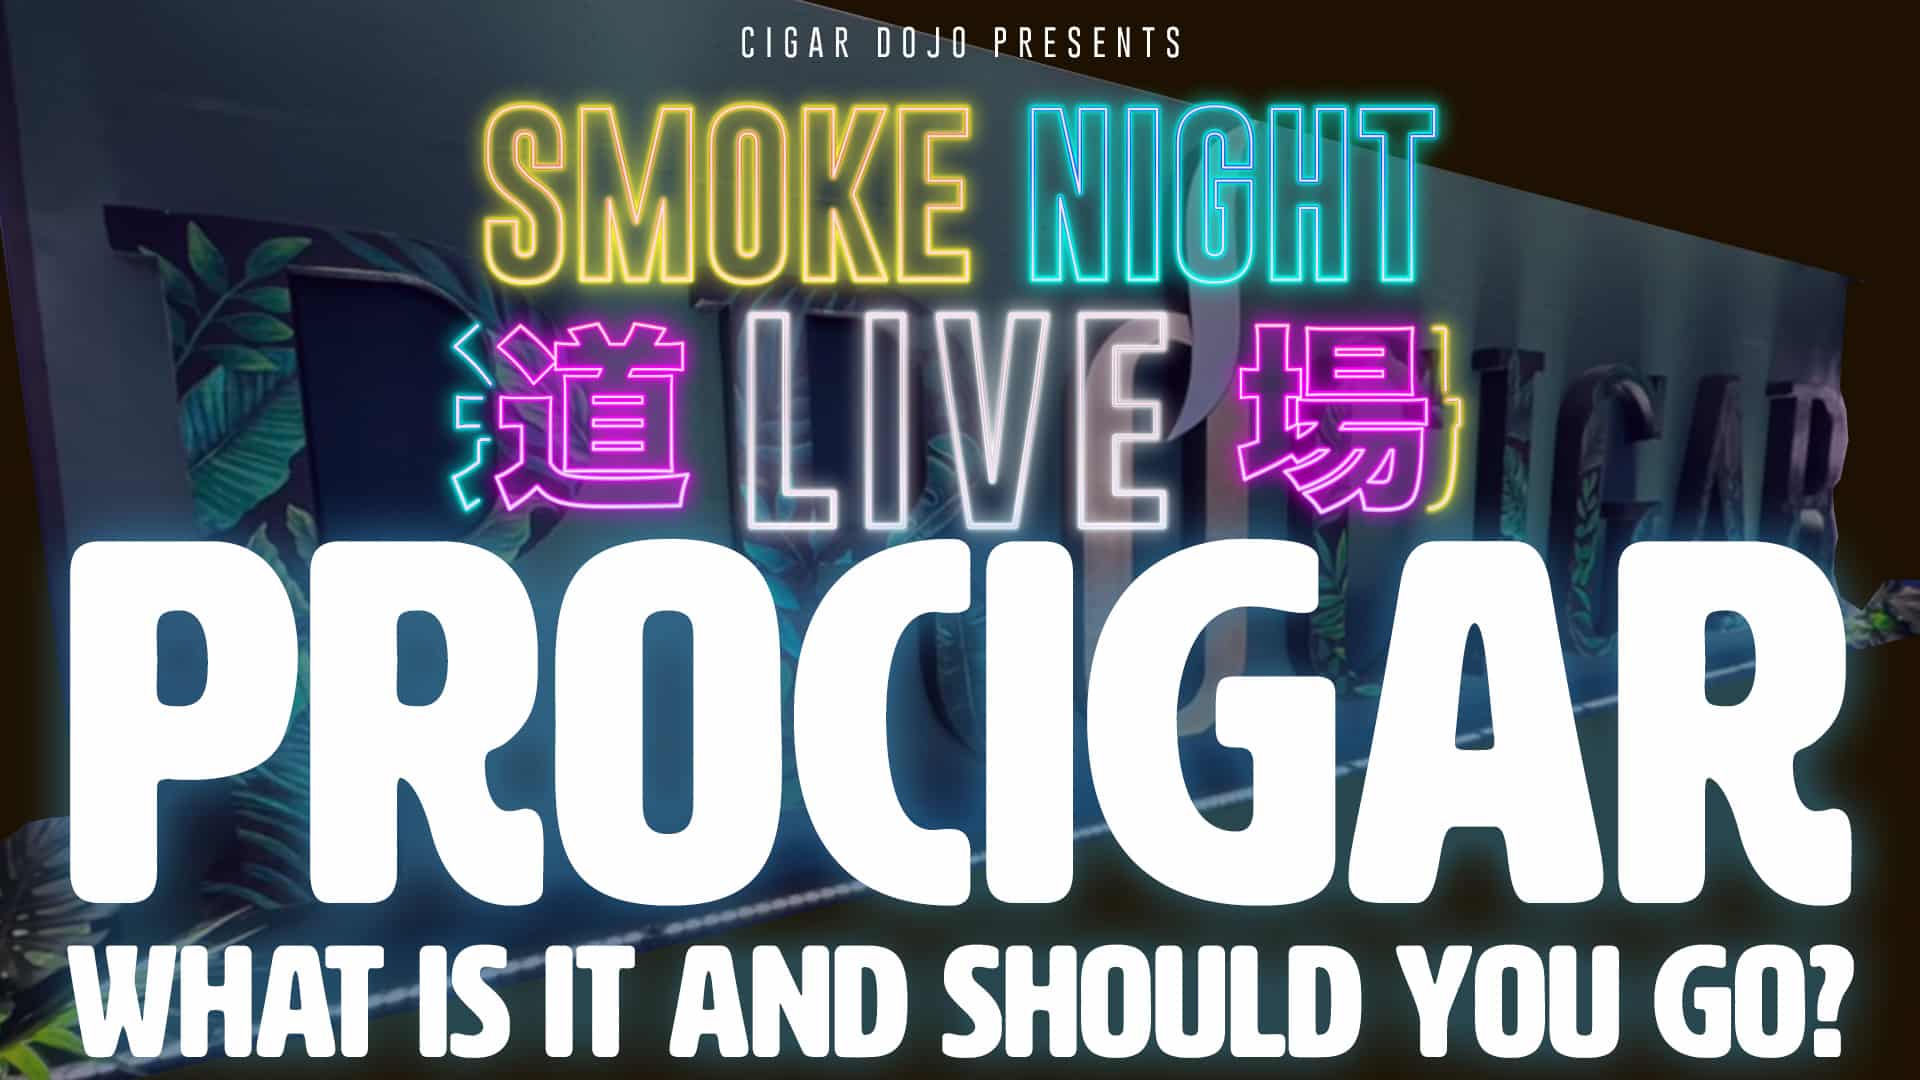 smoke-night-live-–-what-is-procigar?